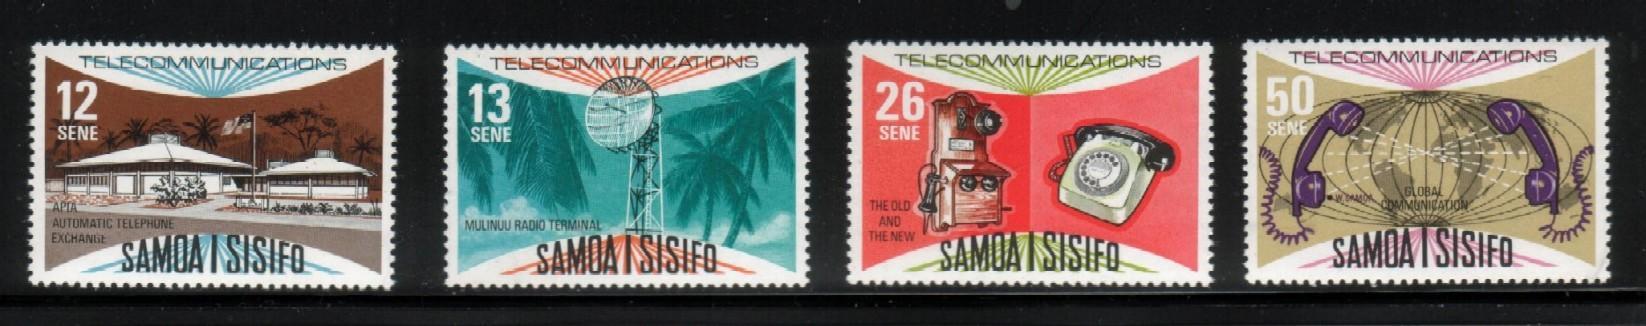 SAMOA 1977 TELECOMMS SET OF 4 NHM - Samoa